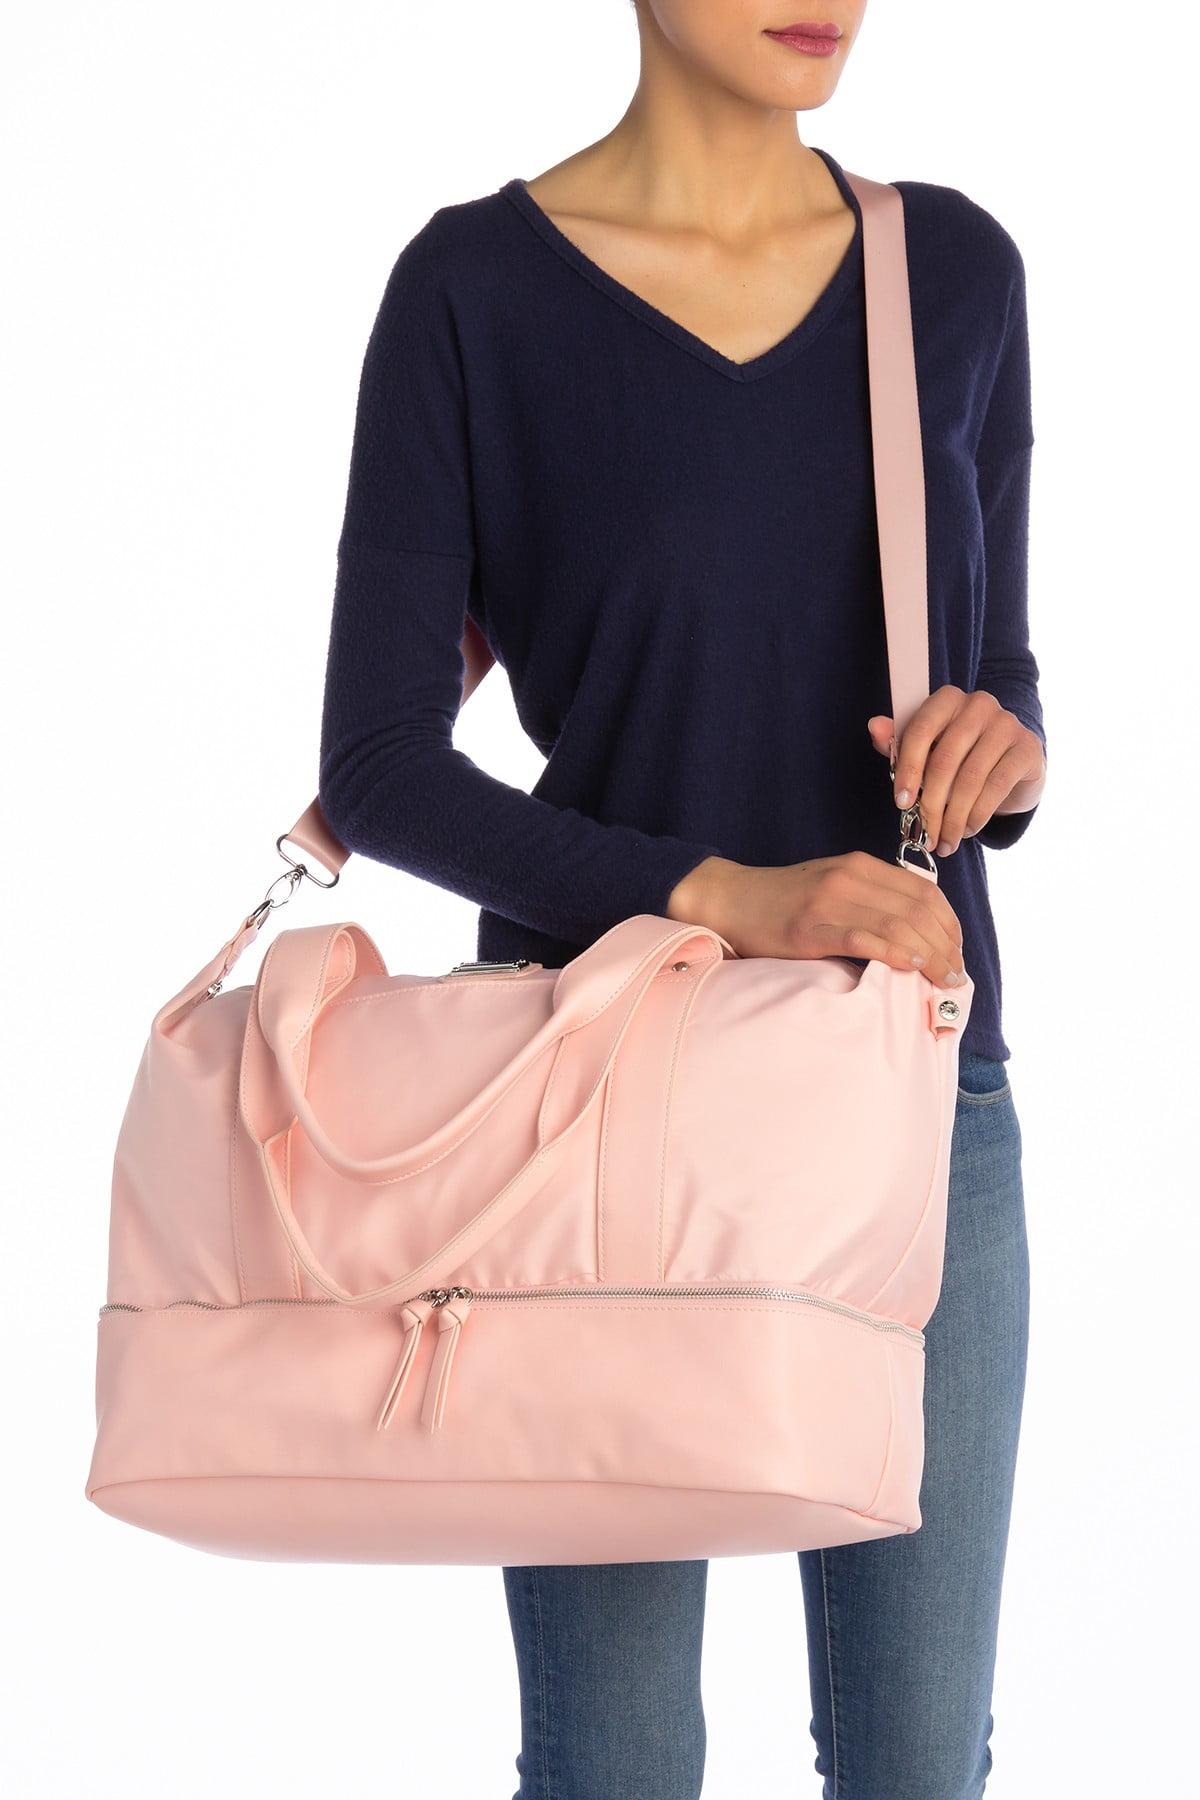 Madden Girl Weekend Duffel Bag in Pink